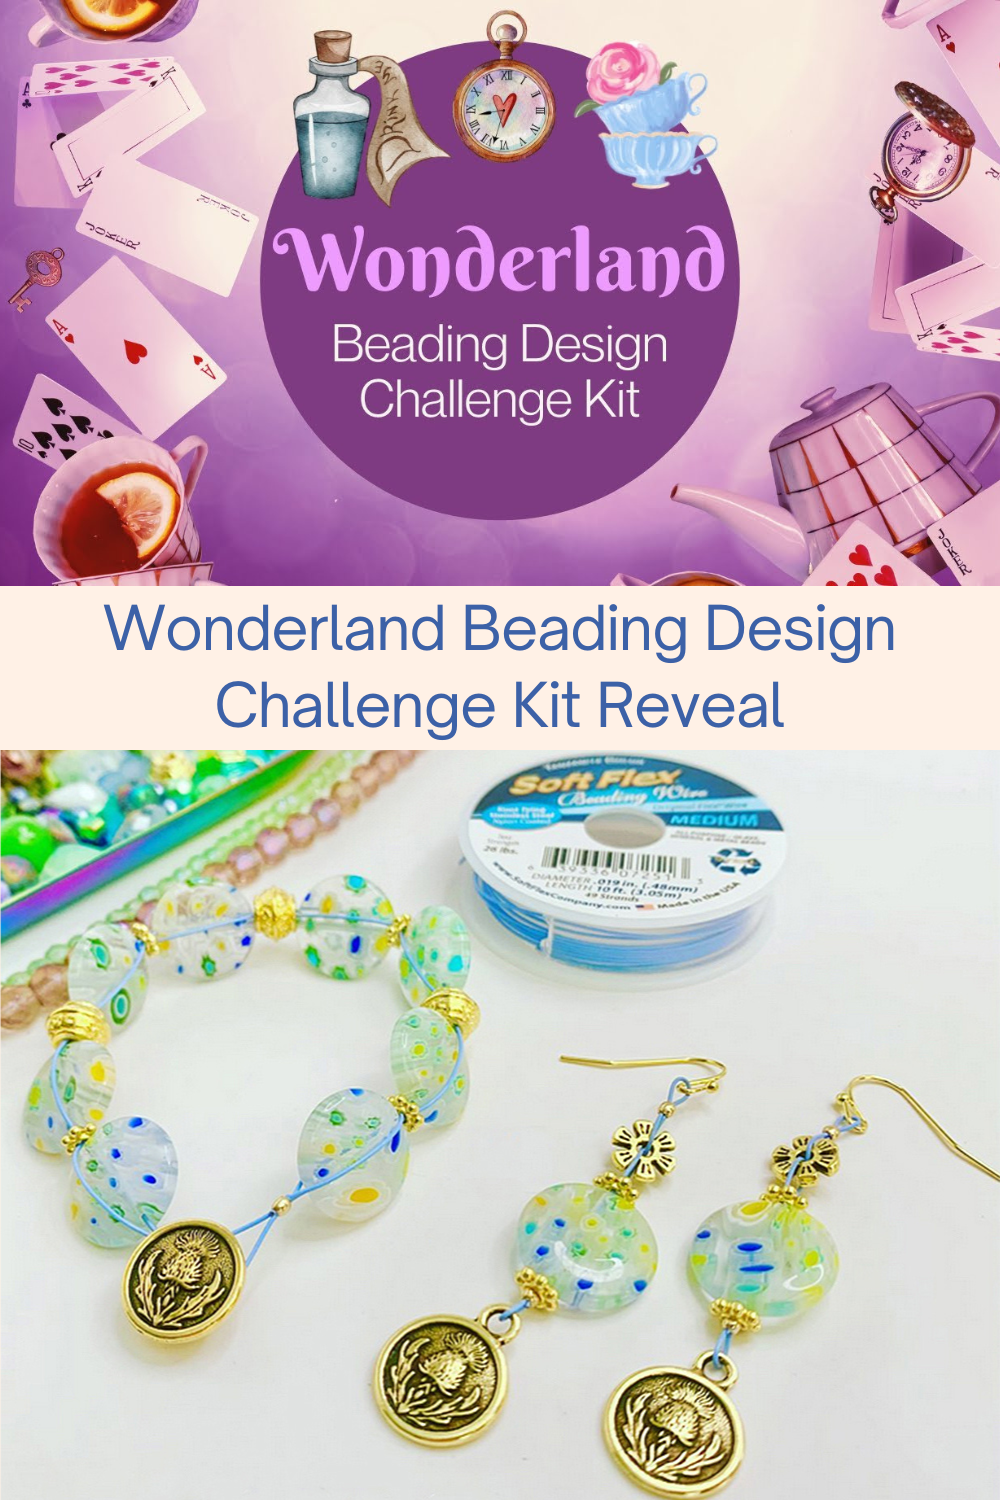 Wonderland Beading Design Challenge Kit Reveal Collage